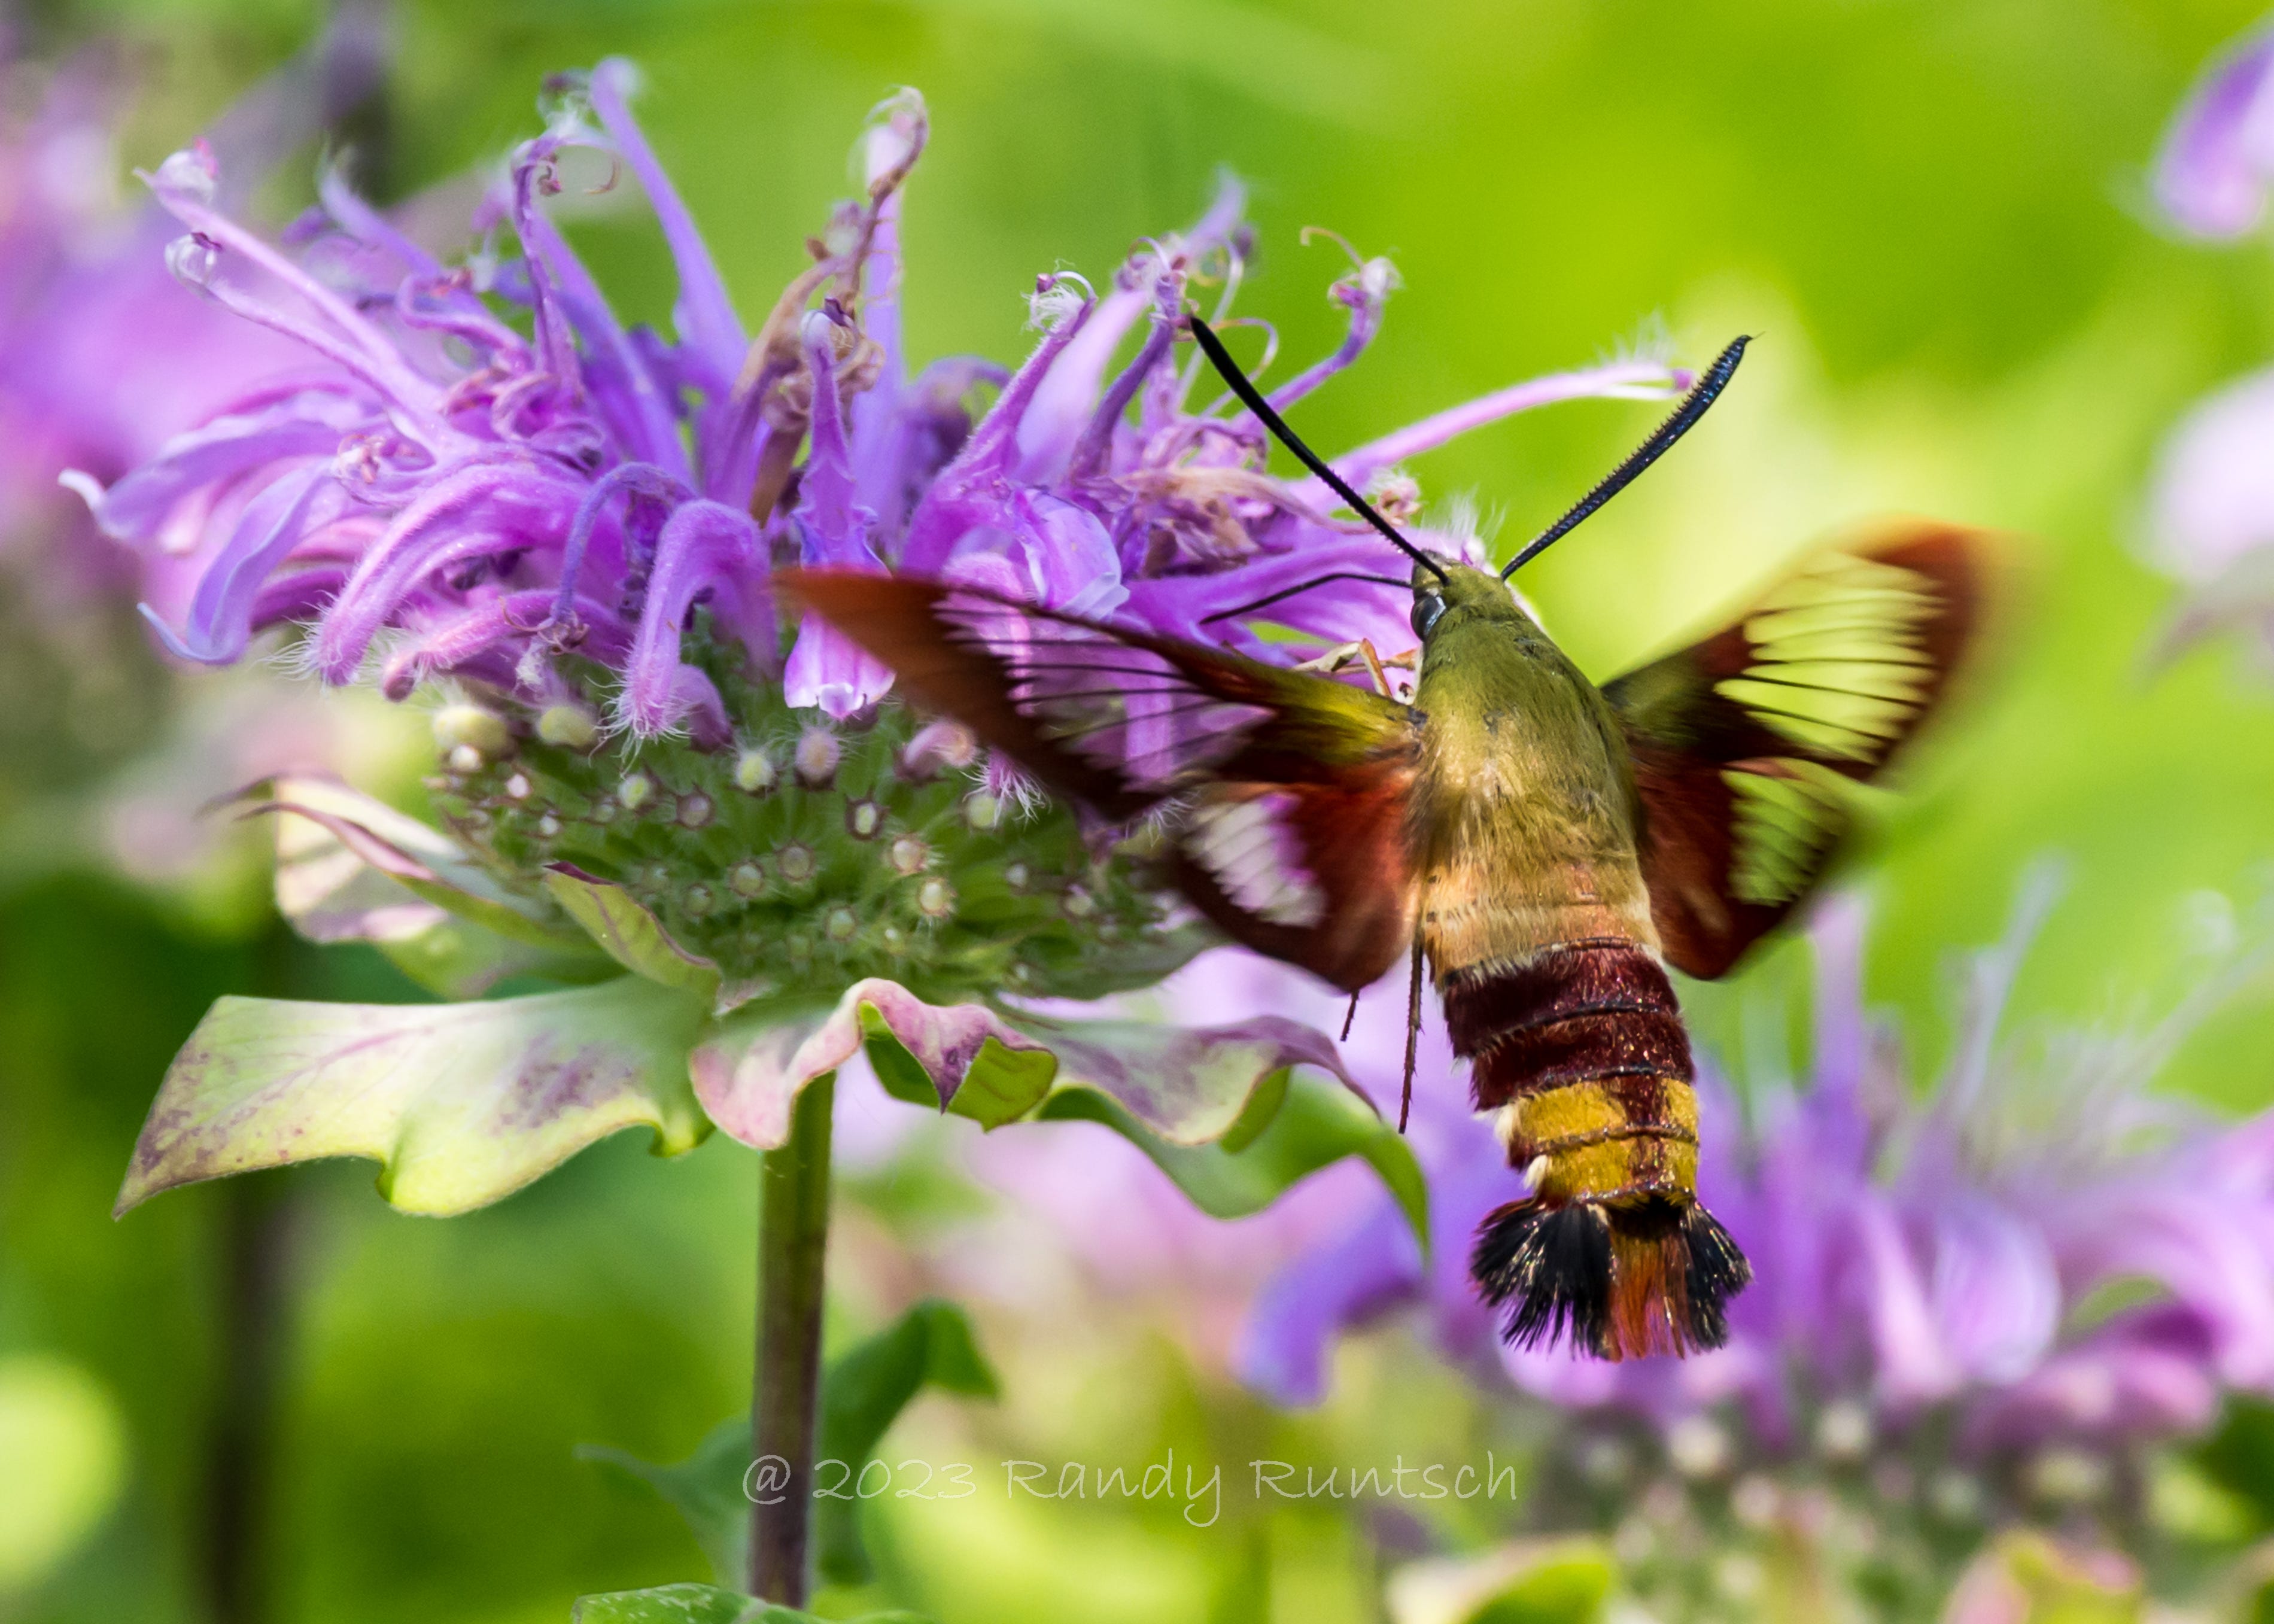 Hummingbird Hawk-Moth Facts